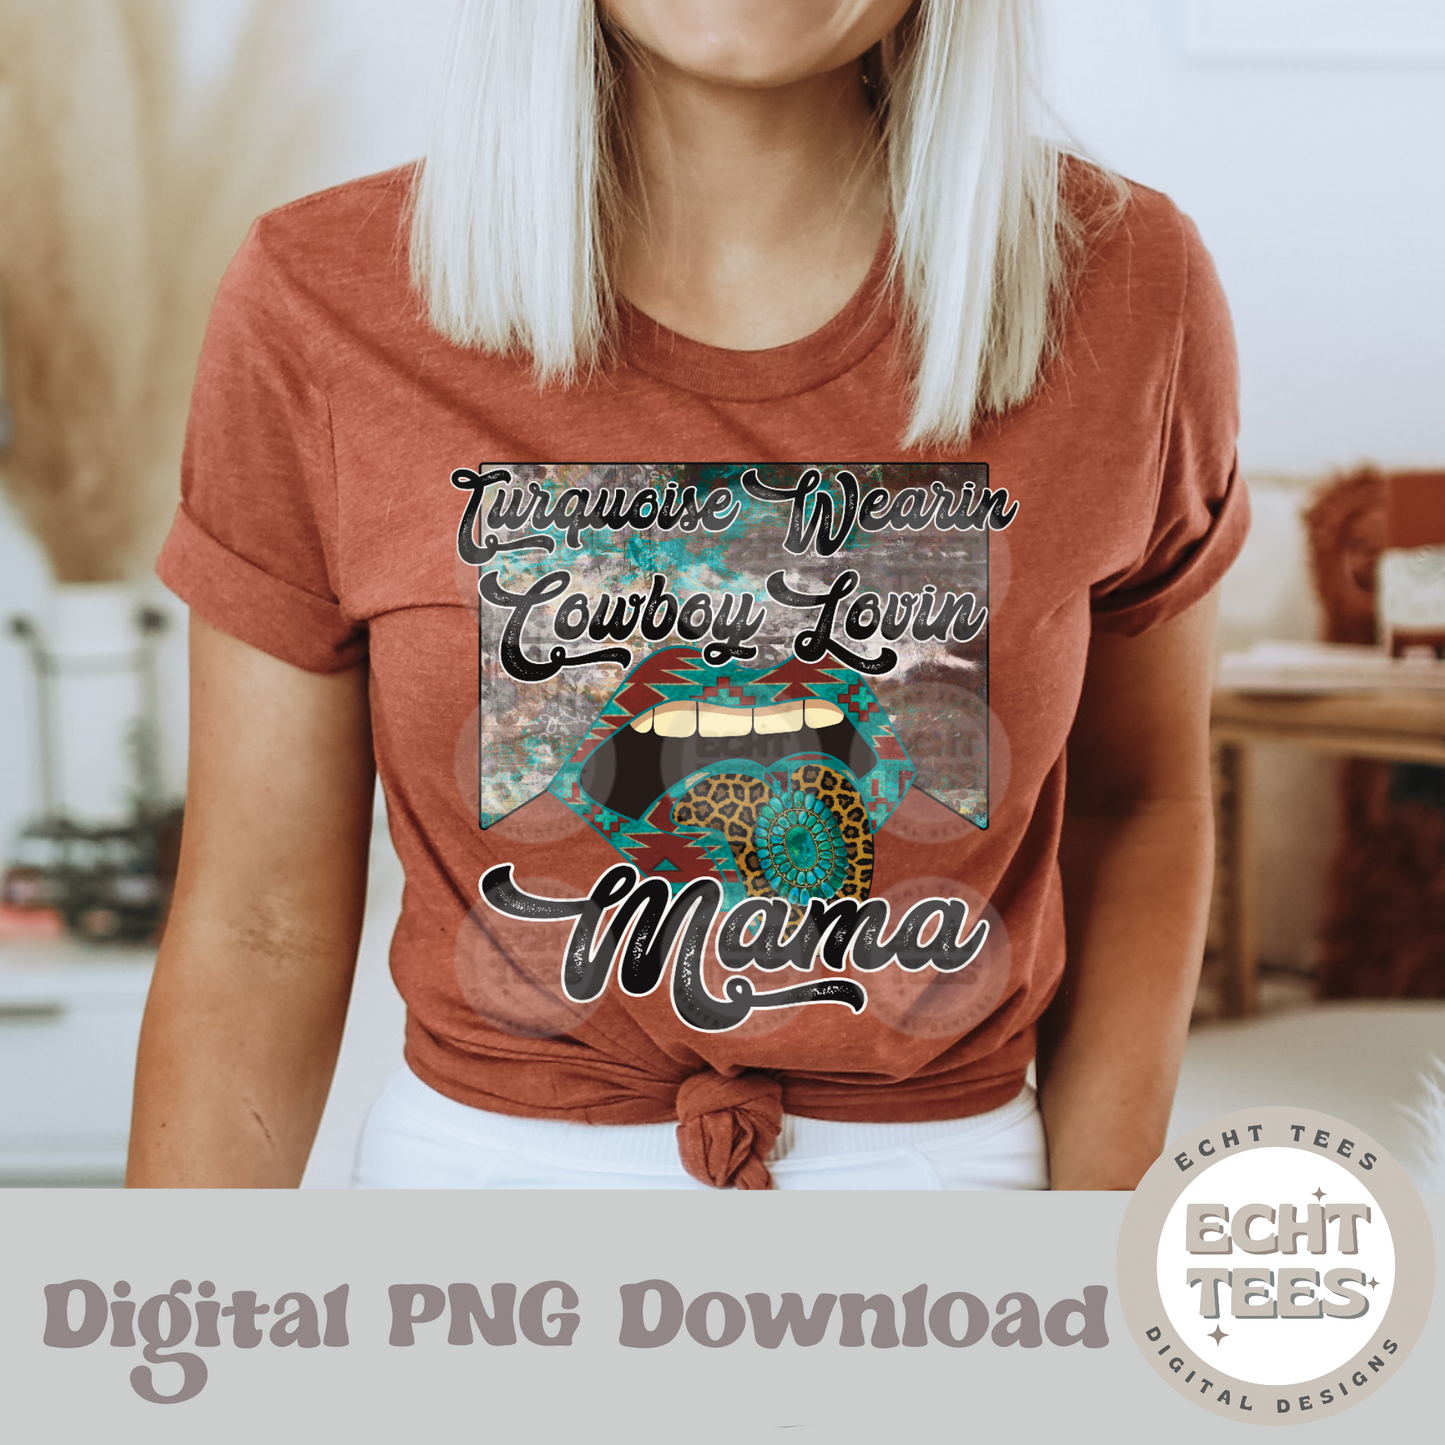 Turquoise wearin cowboy lovin mama PNG Digital Download